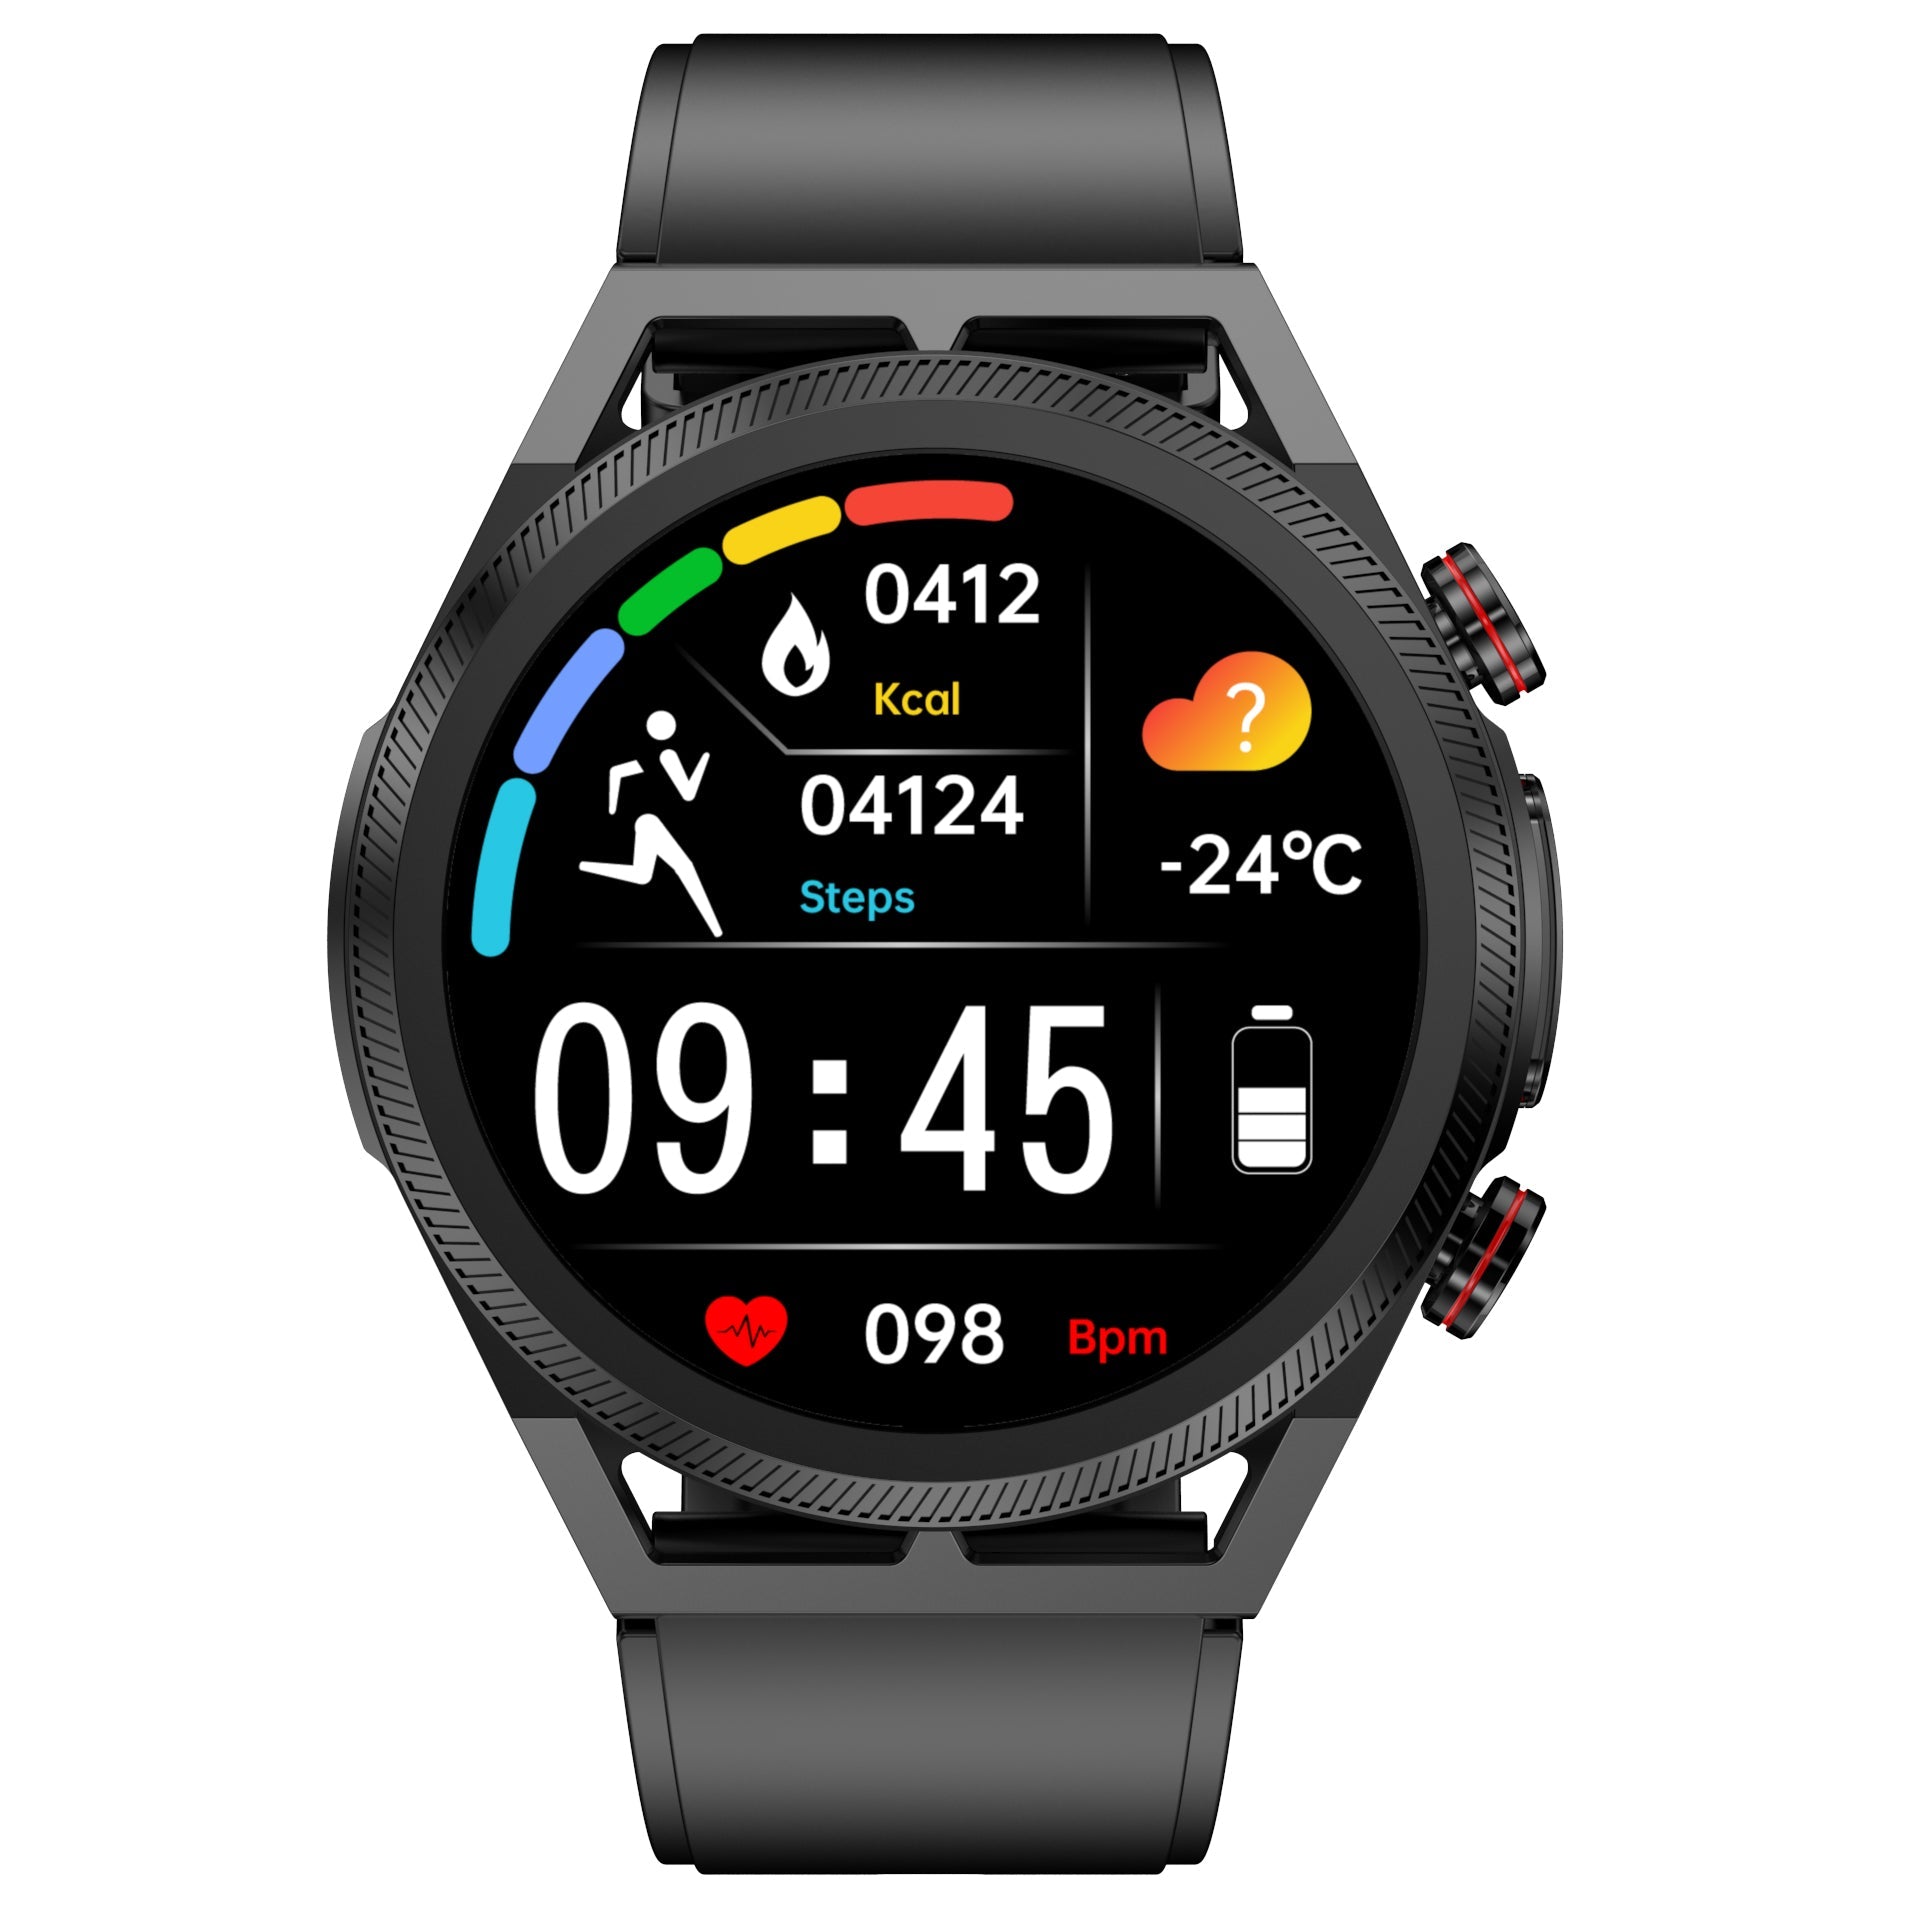 waterproof android smart watch